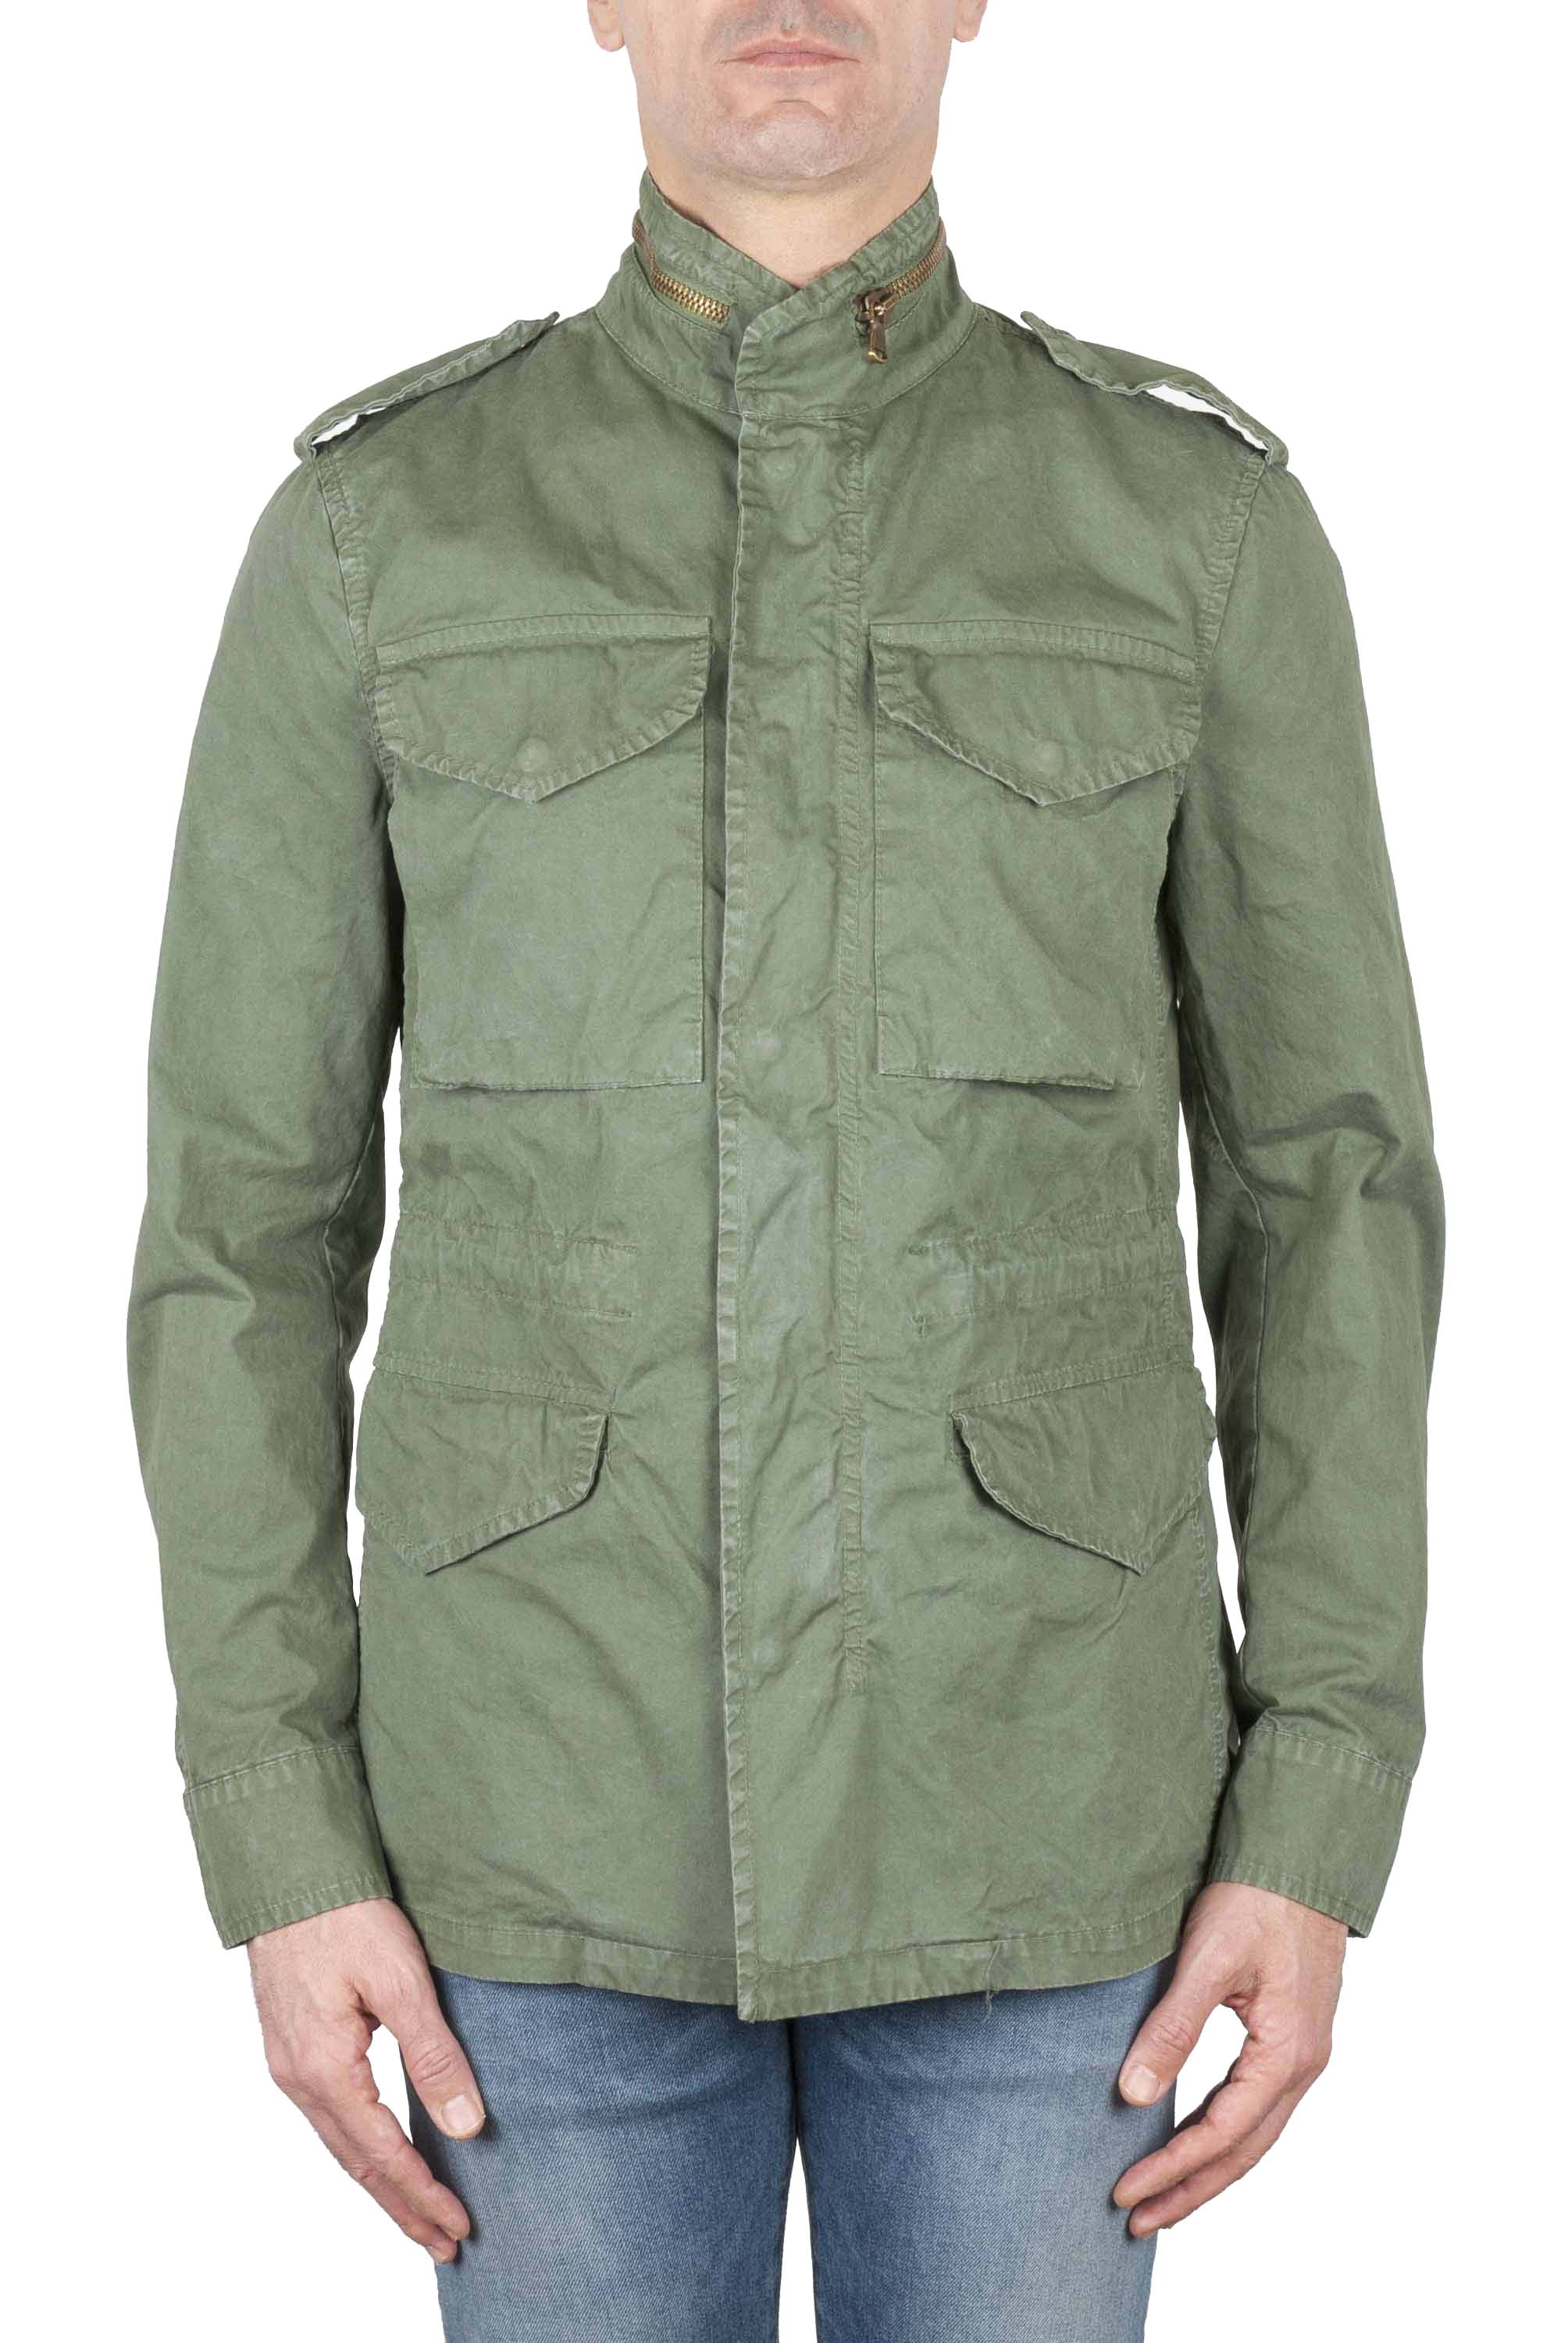 SBU 01567 Stone washed green cotton military field jacket 01